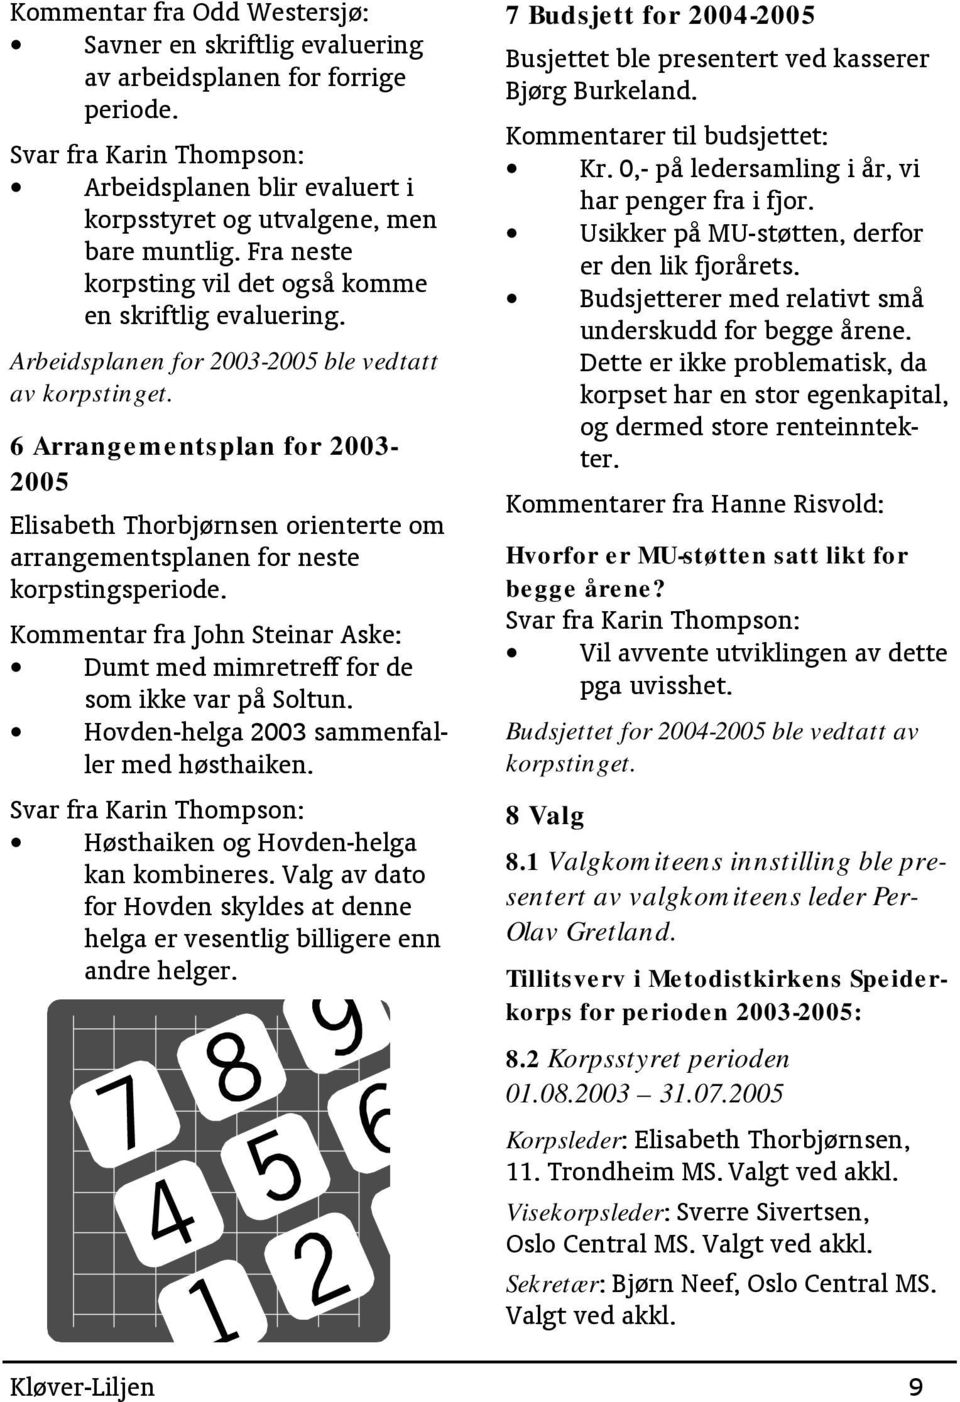 6 Arrangementsplan for 2003-2005 Elisabeth Thorbjørnsen orienterte om arrangementsplanen for neste korpstingsperiode.